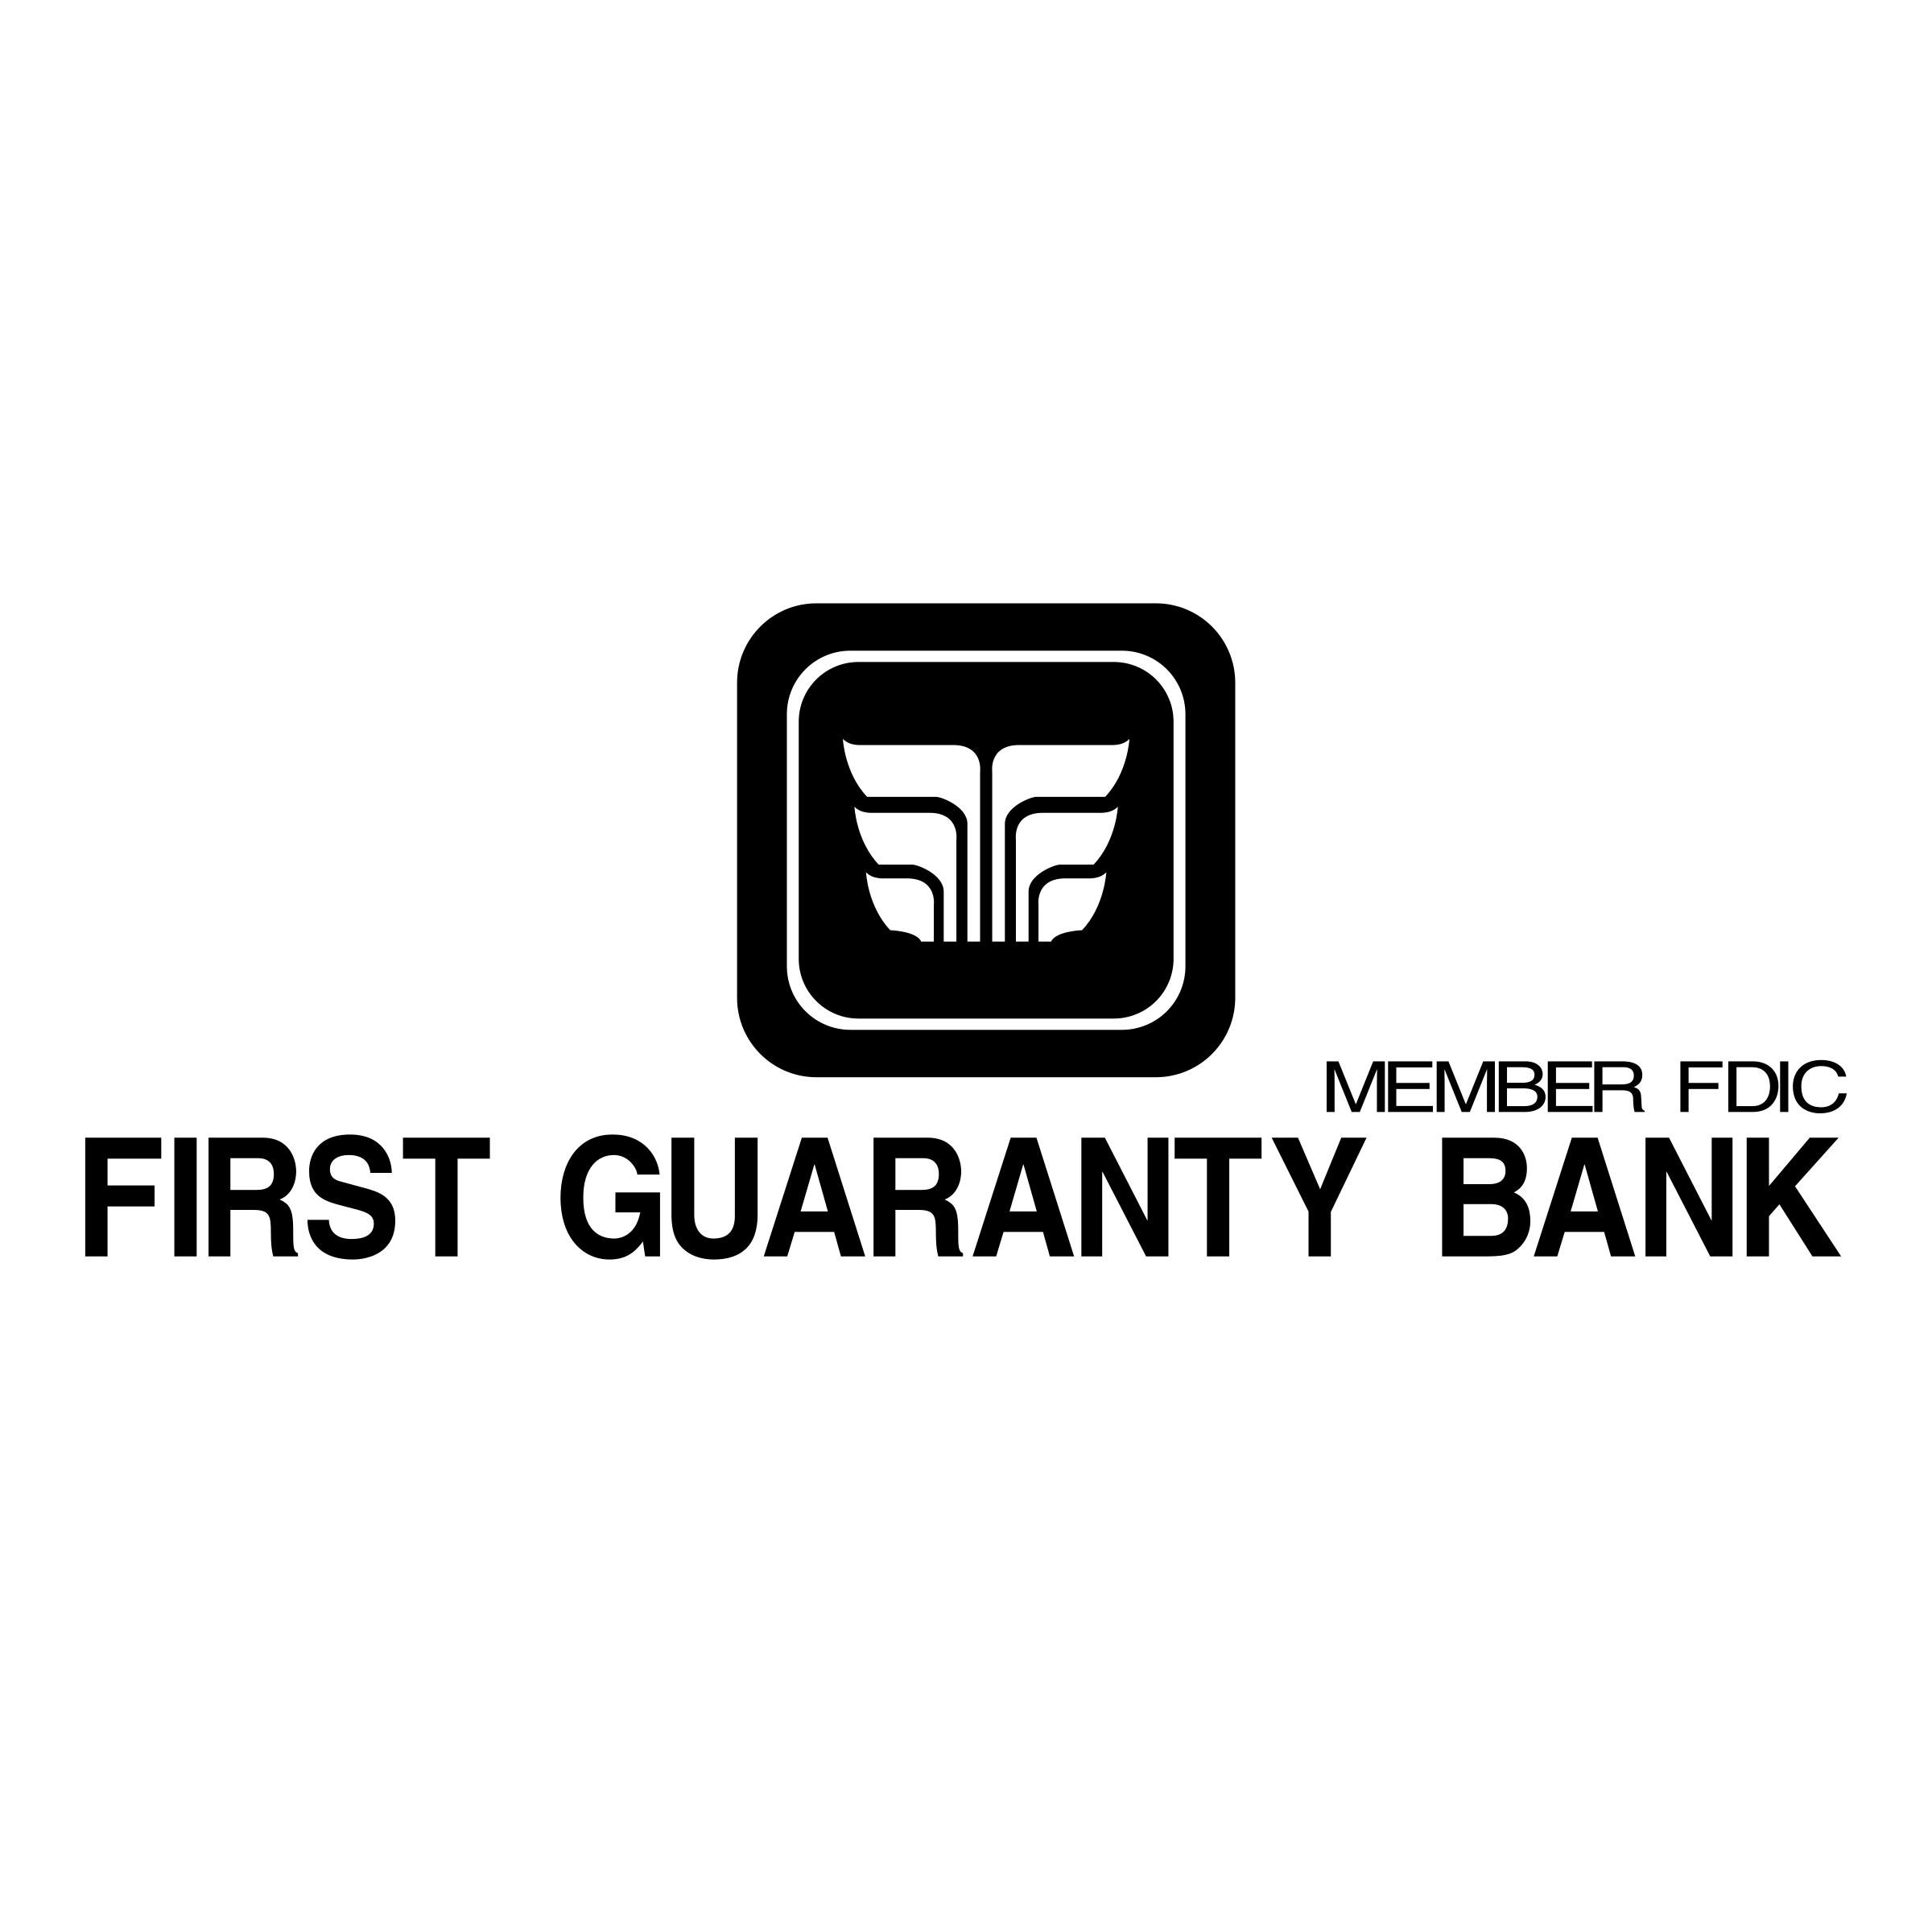 Www.guarantybank.com Logo - First Guaranty Bank Logo PNG Transparent & SVG Vector - Freebie Supply